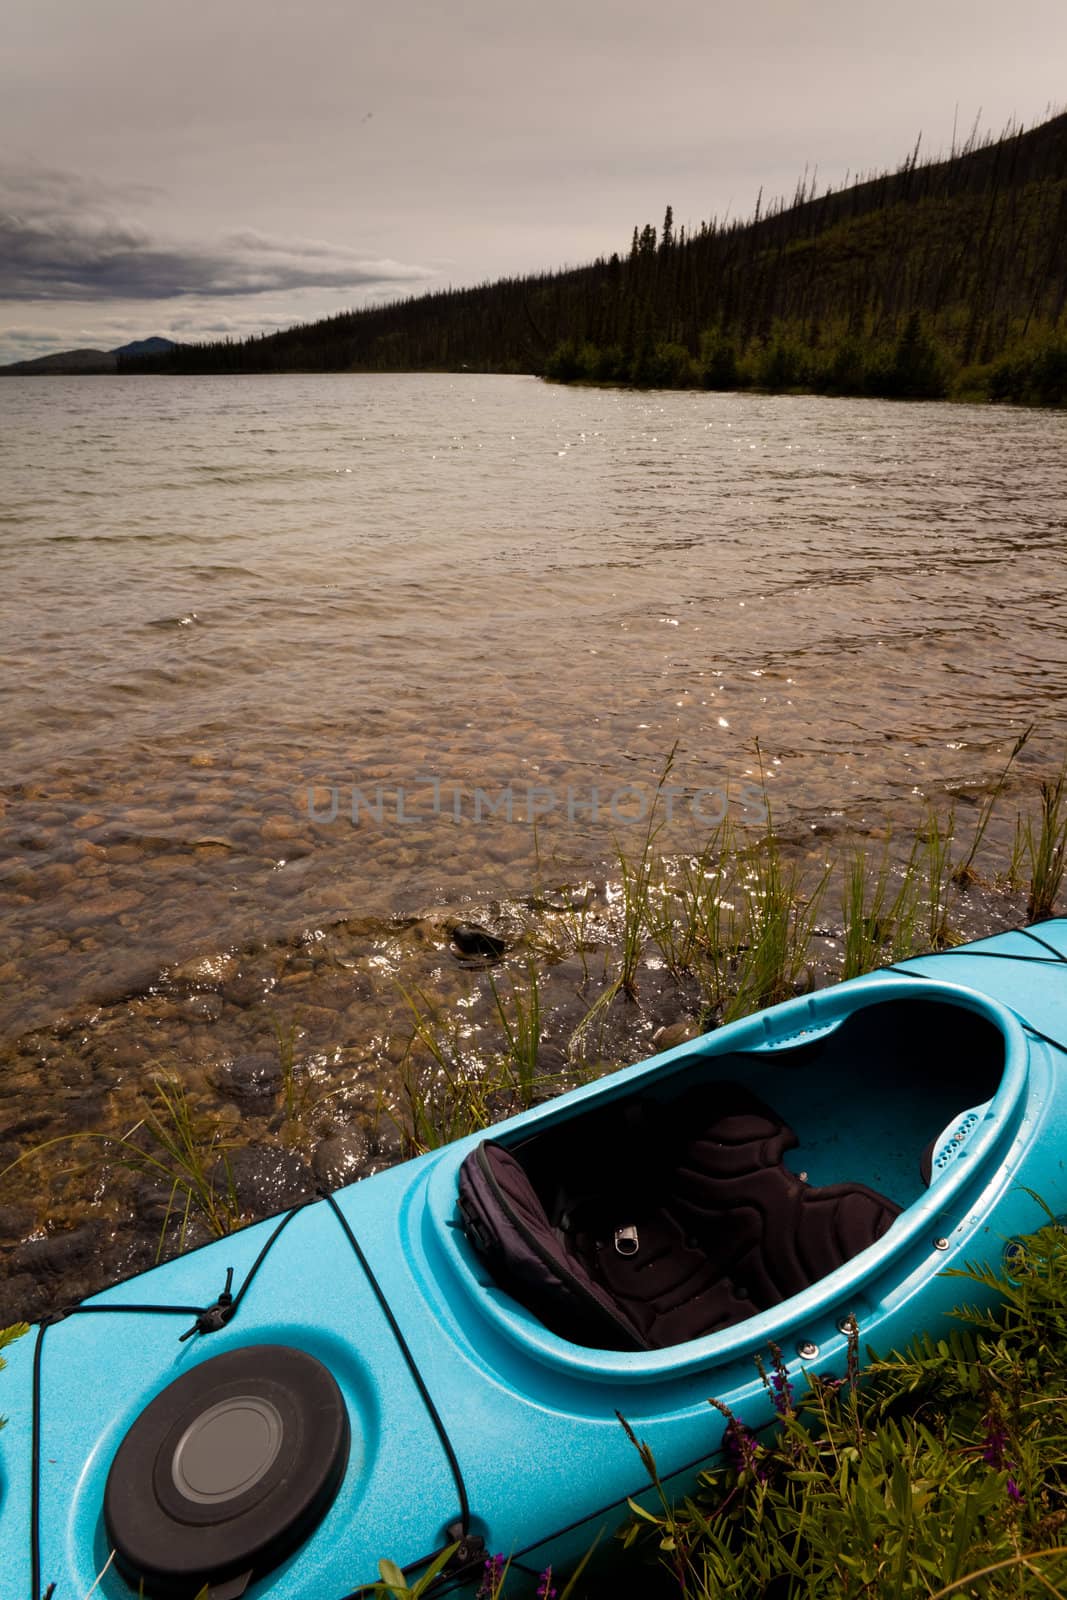 Kayak ready to go on lake shore